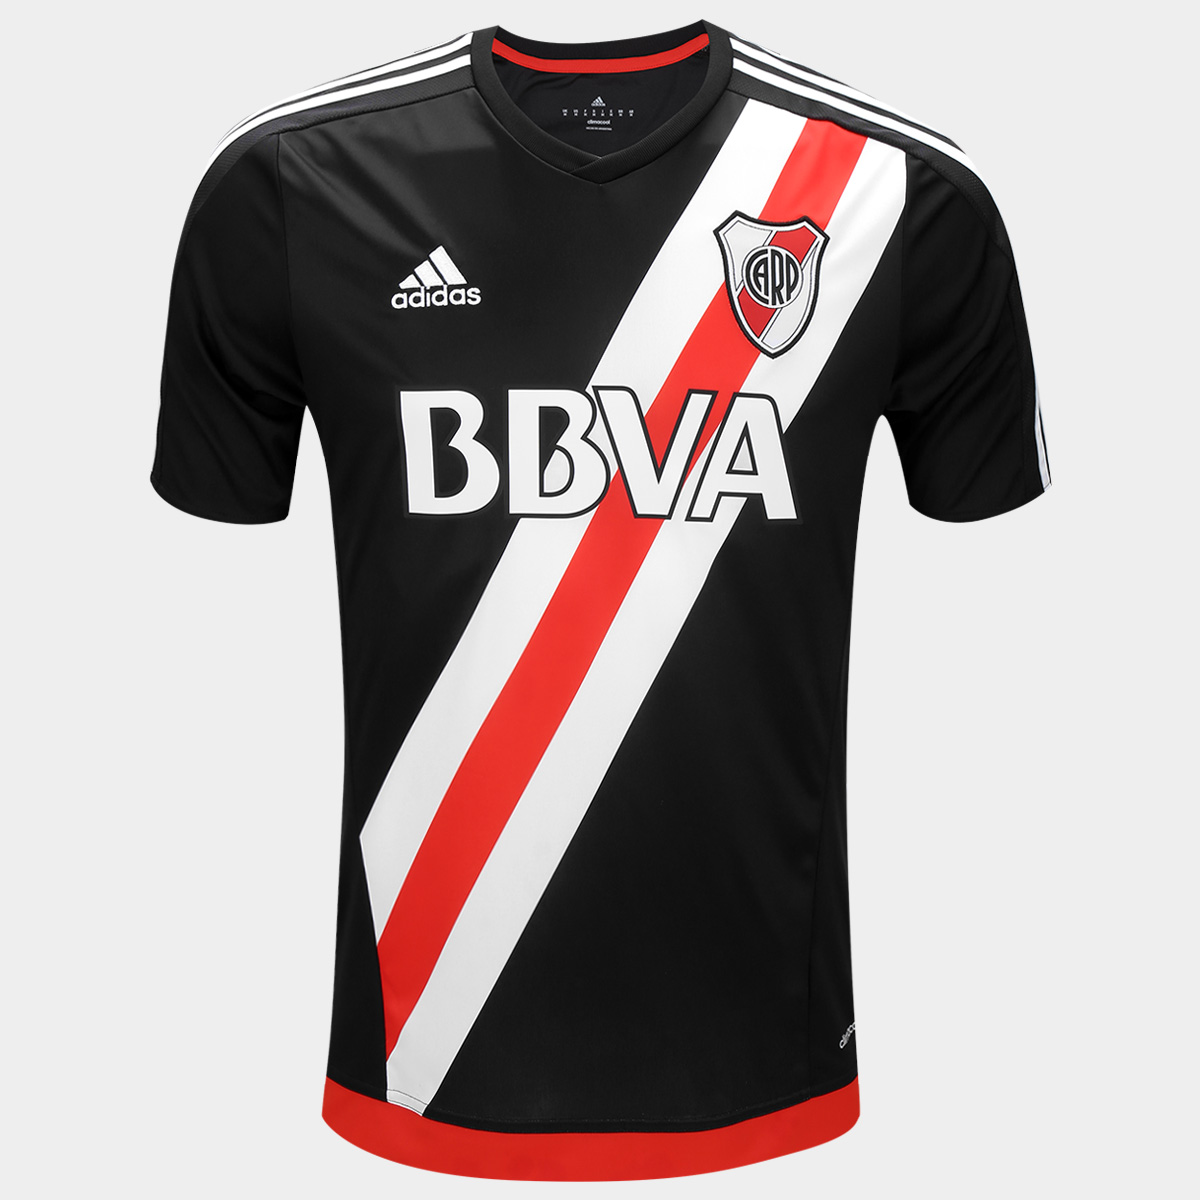 Camiseta River Plate Labruna adidas 2016 17